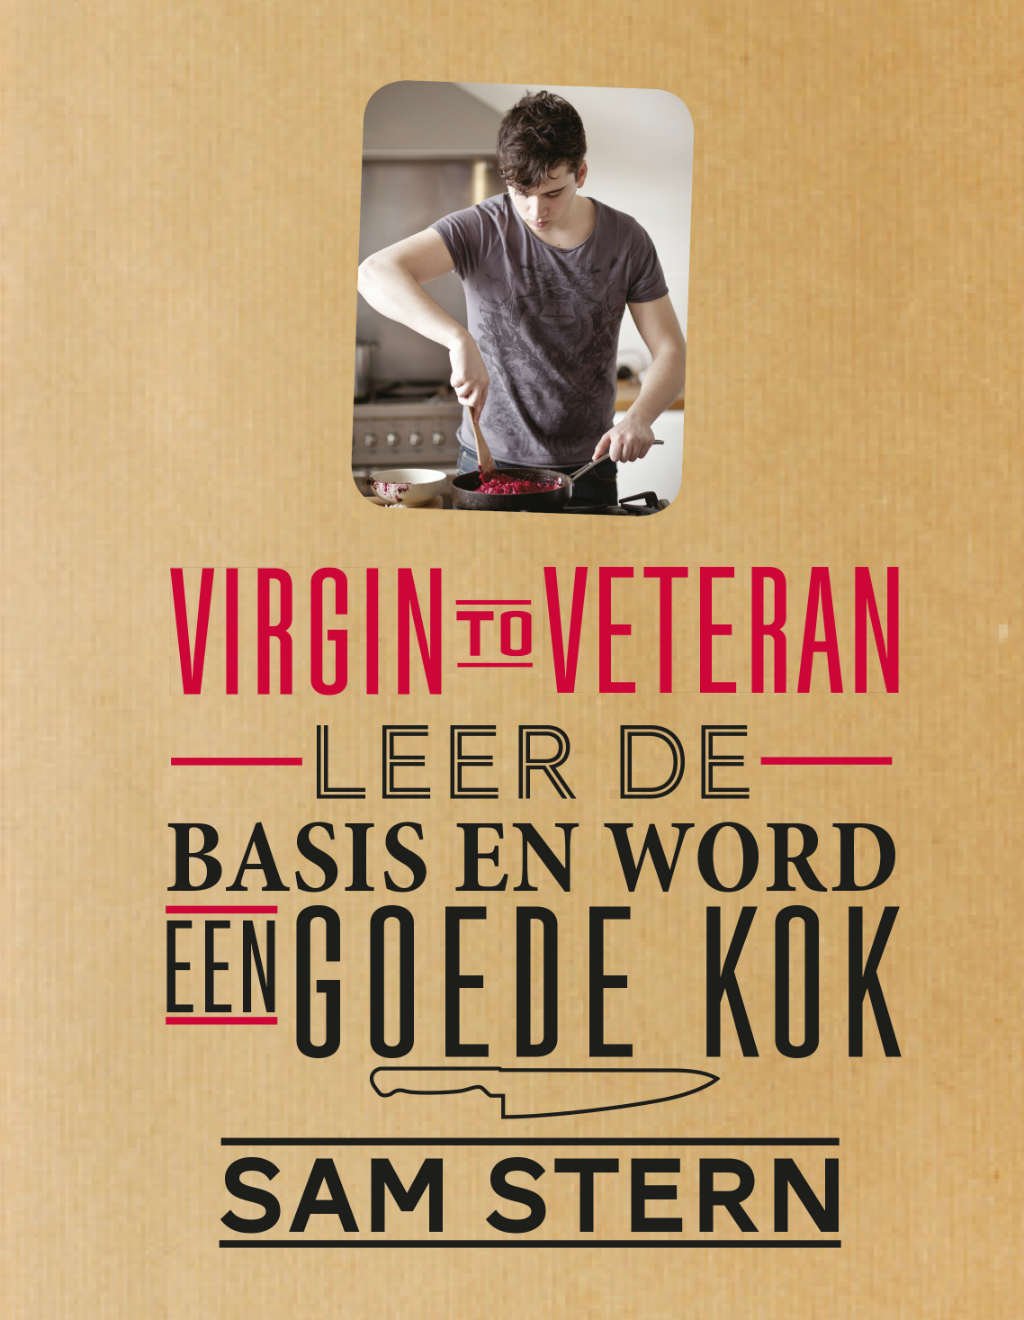 Review Sam Stern – Virgin to veteran